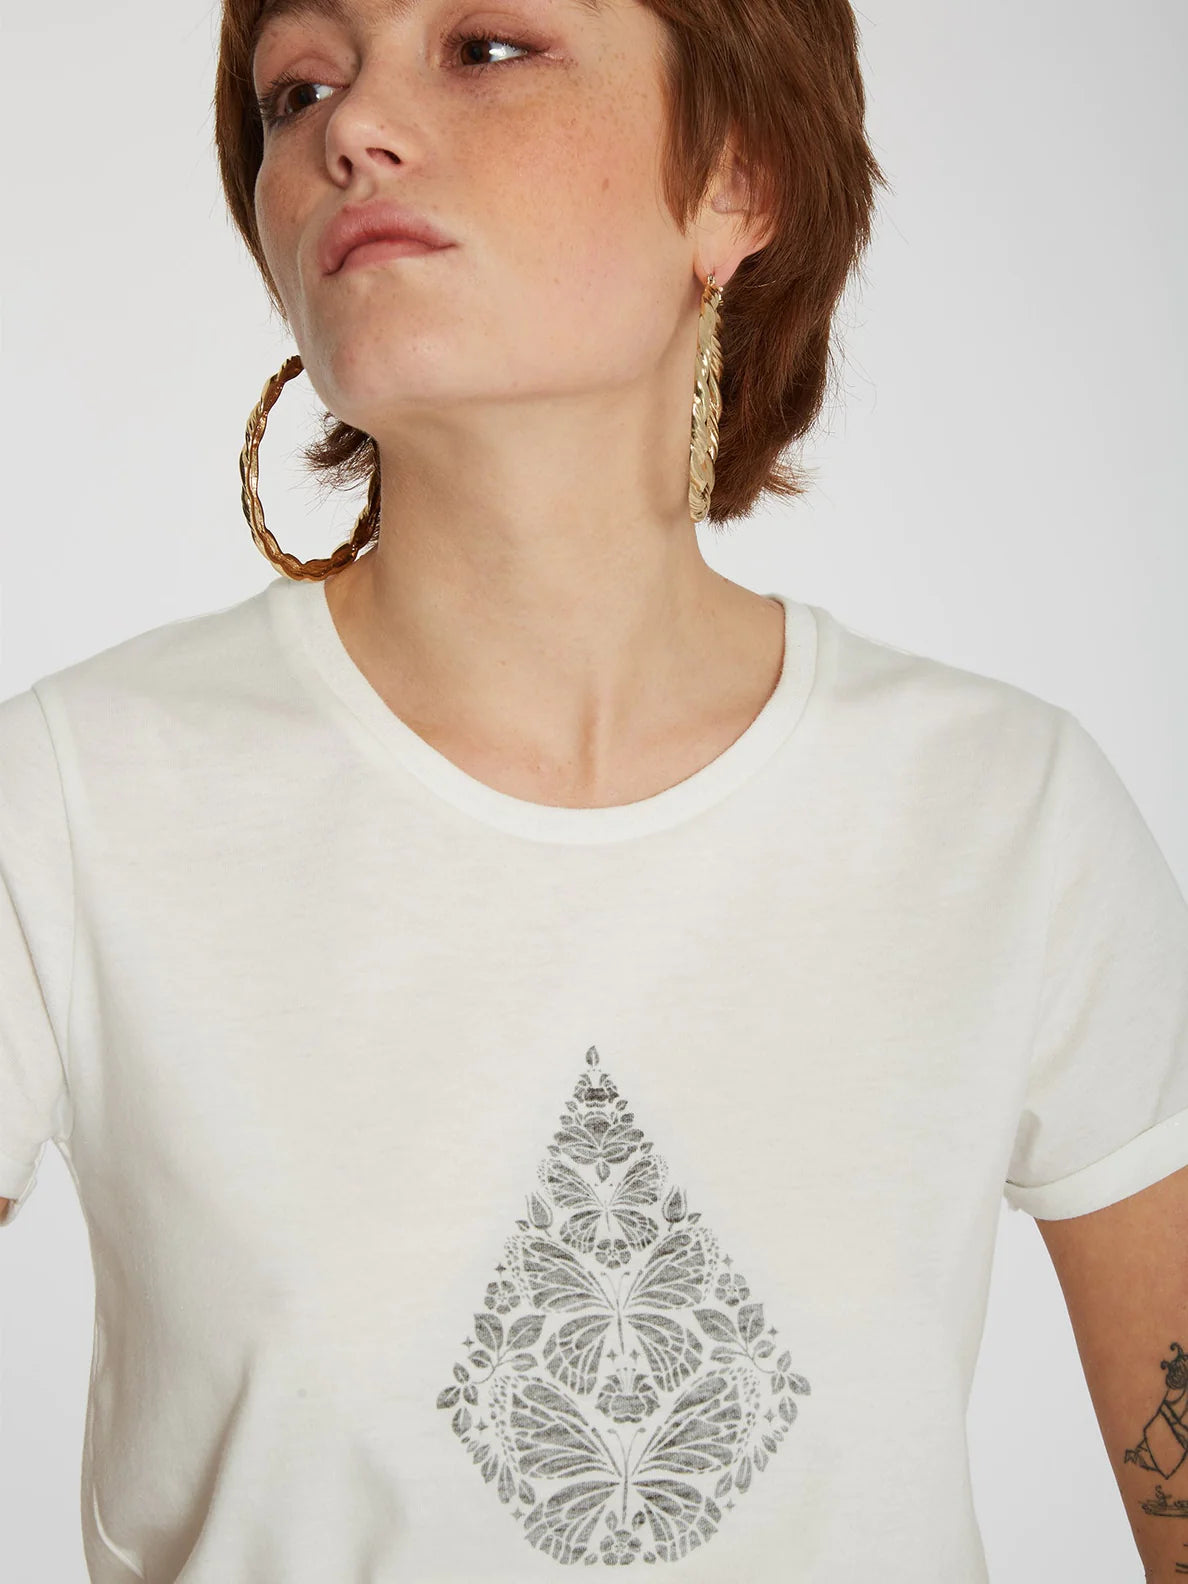 Volcom Radical Daze Tee Star Weißes Mädchen-T-Shirt